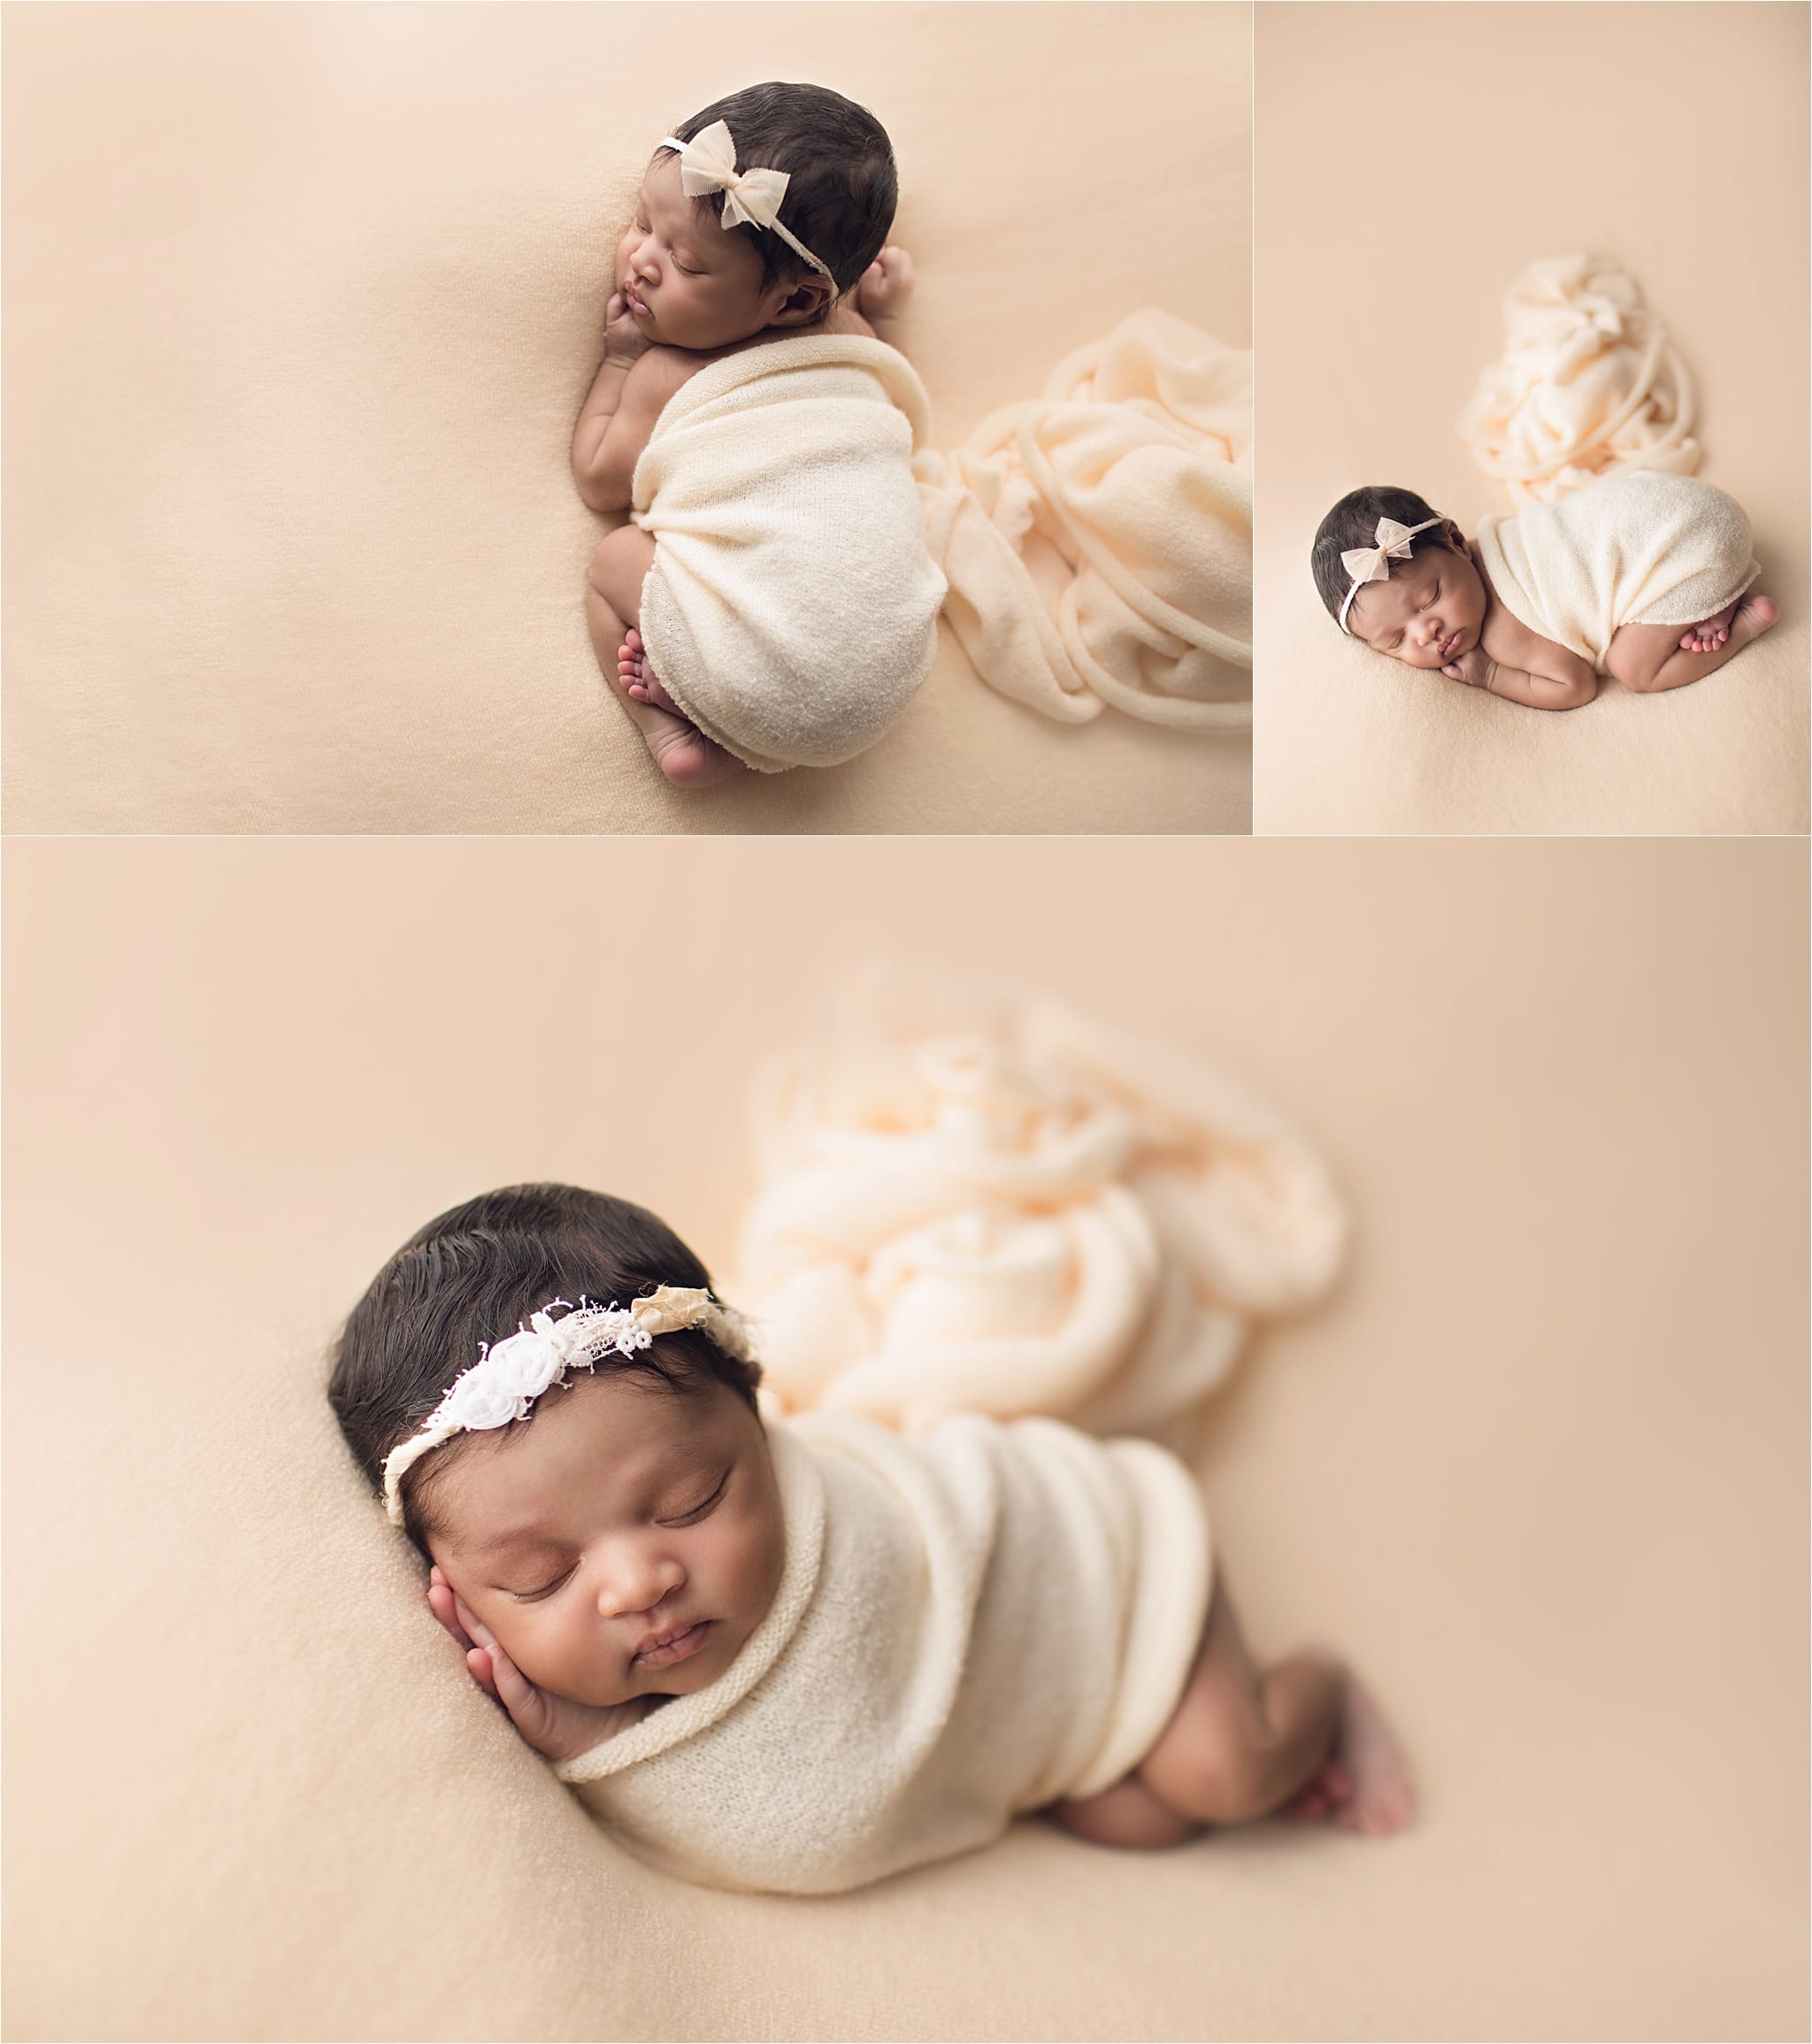 Long Grove Newborn Photographer | Agata Brannon Photography